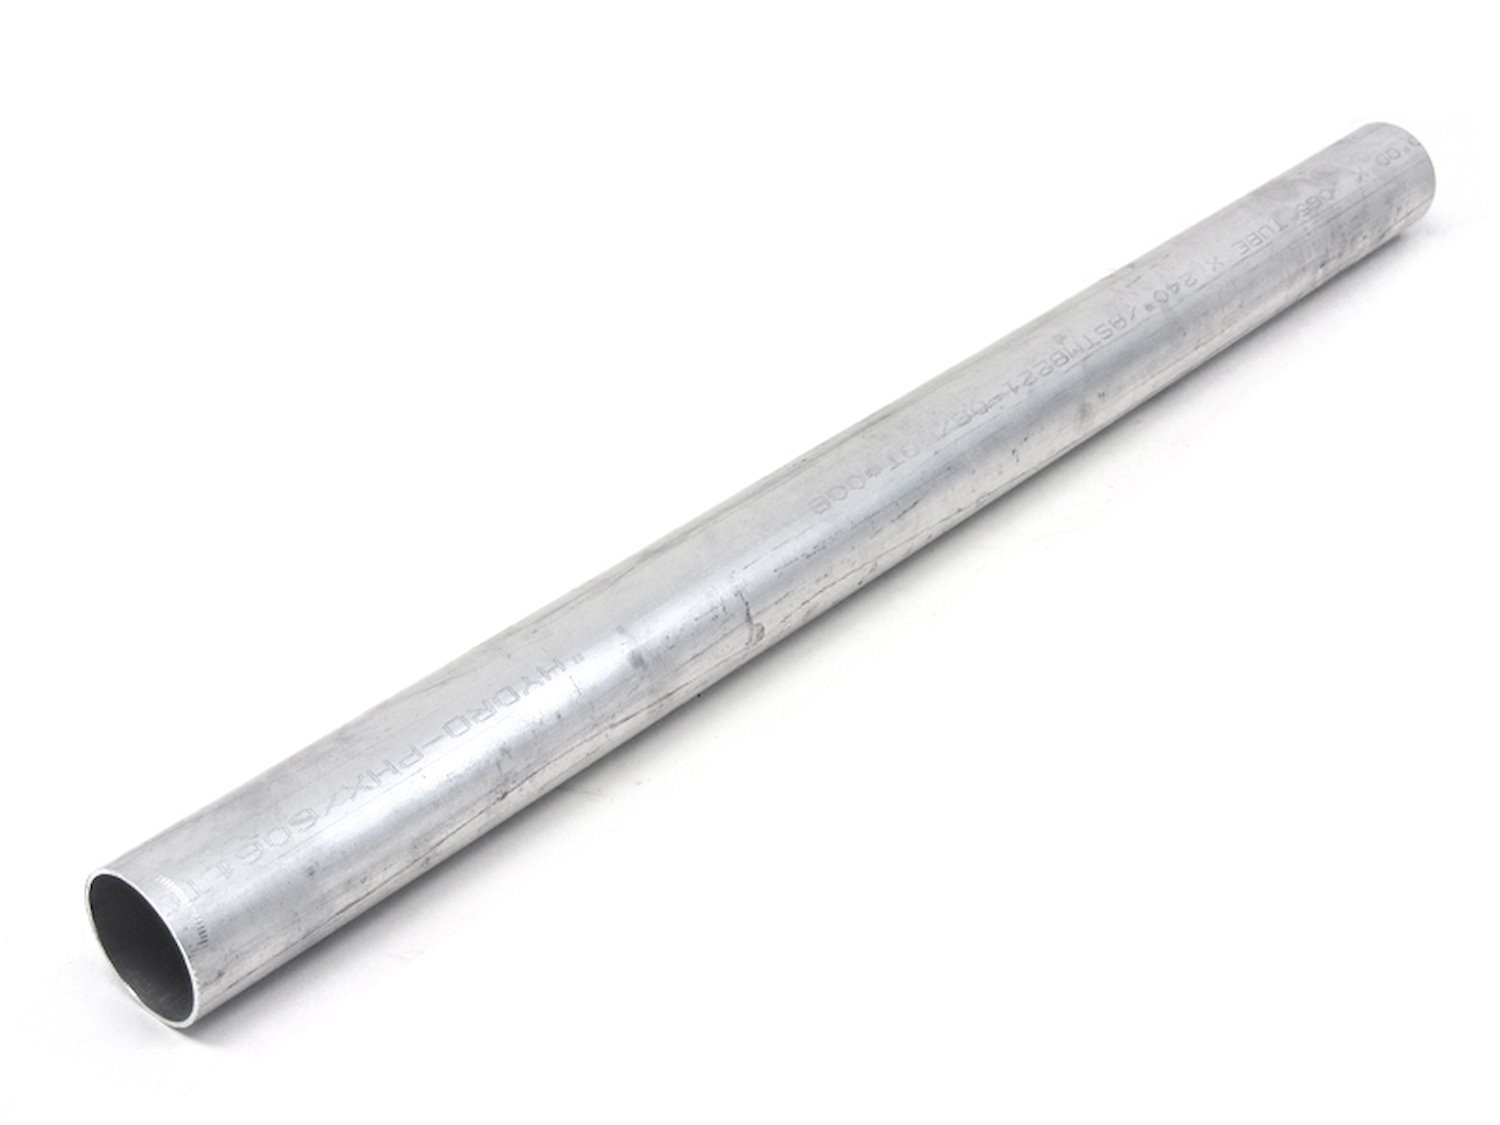 AST-2F-125 Aluminum Tubing, 6061 Aluminum, Straight Tubing, 1-1/4 in. OD, Seamless, Raw Finish, 2 ft. Long